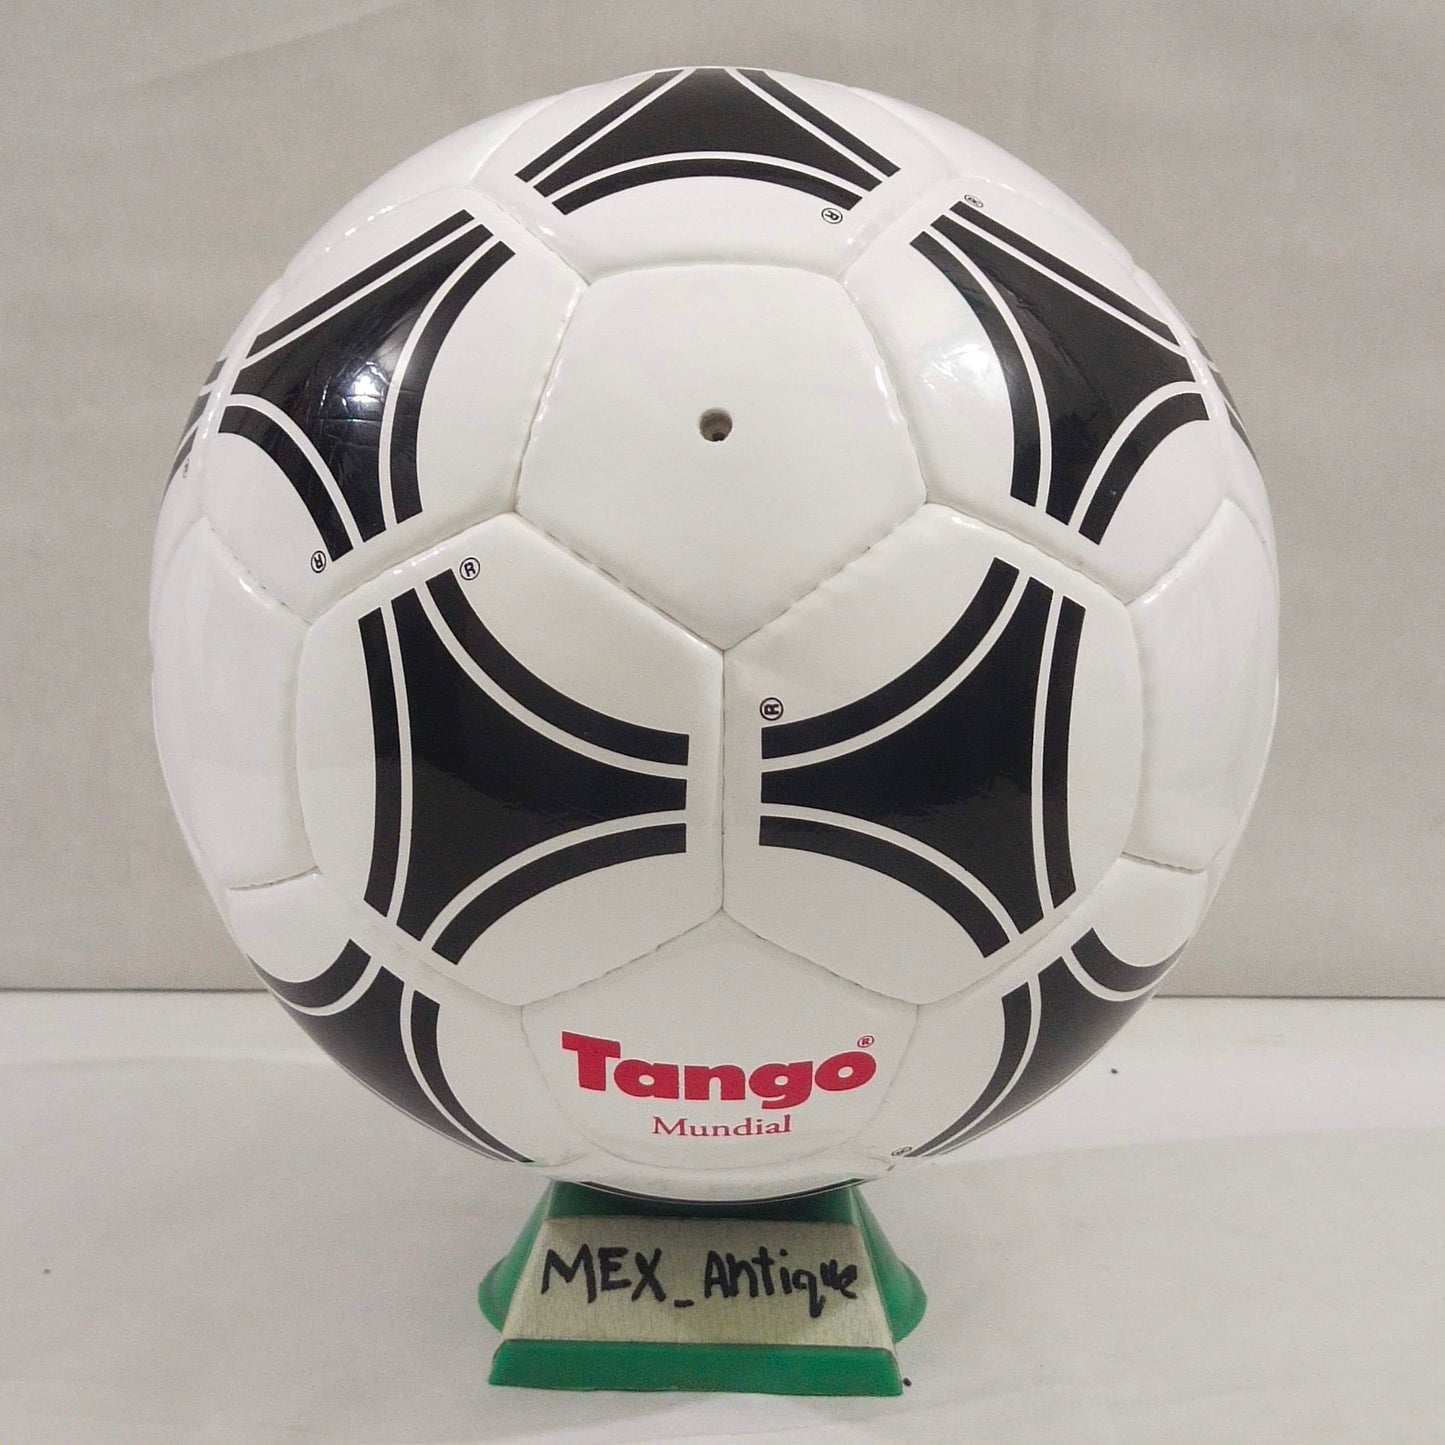 Adidas Tango Mundial | 1984 | UEFA Europa League | Official Match Ball | Size 5 03